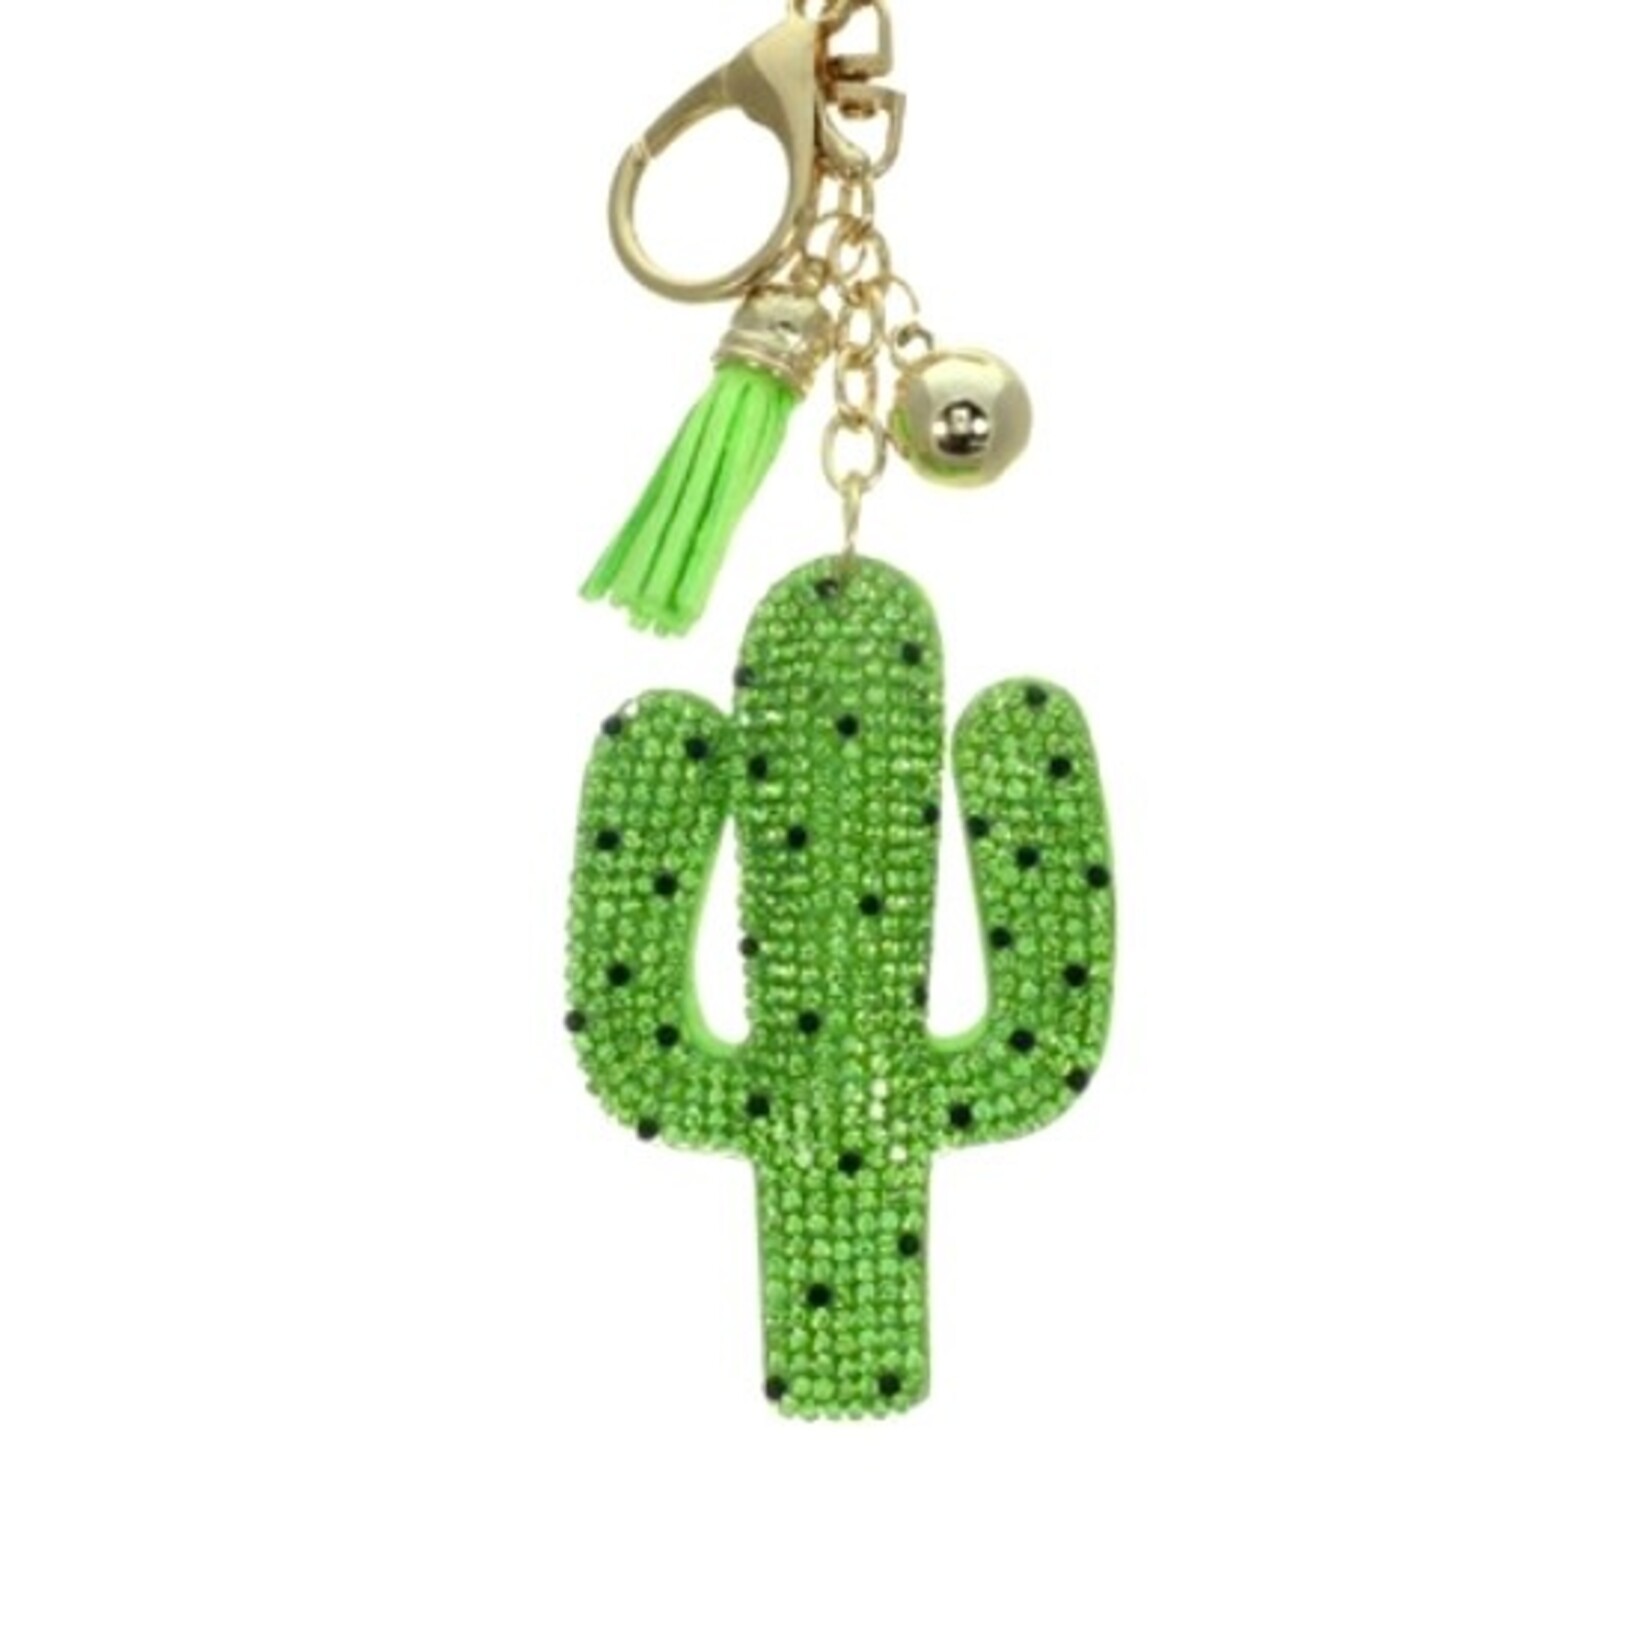 Bling & Things Bling Flower & Cactus Keychain